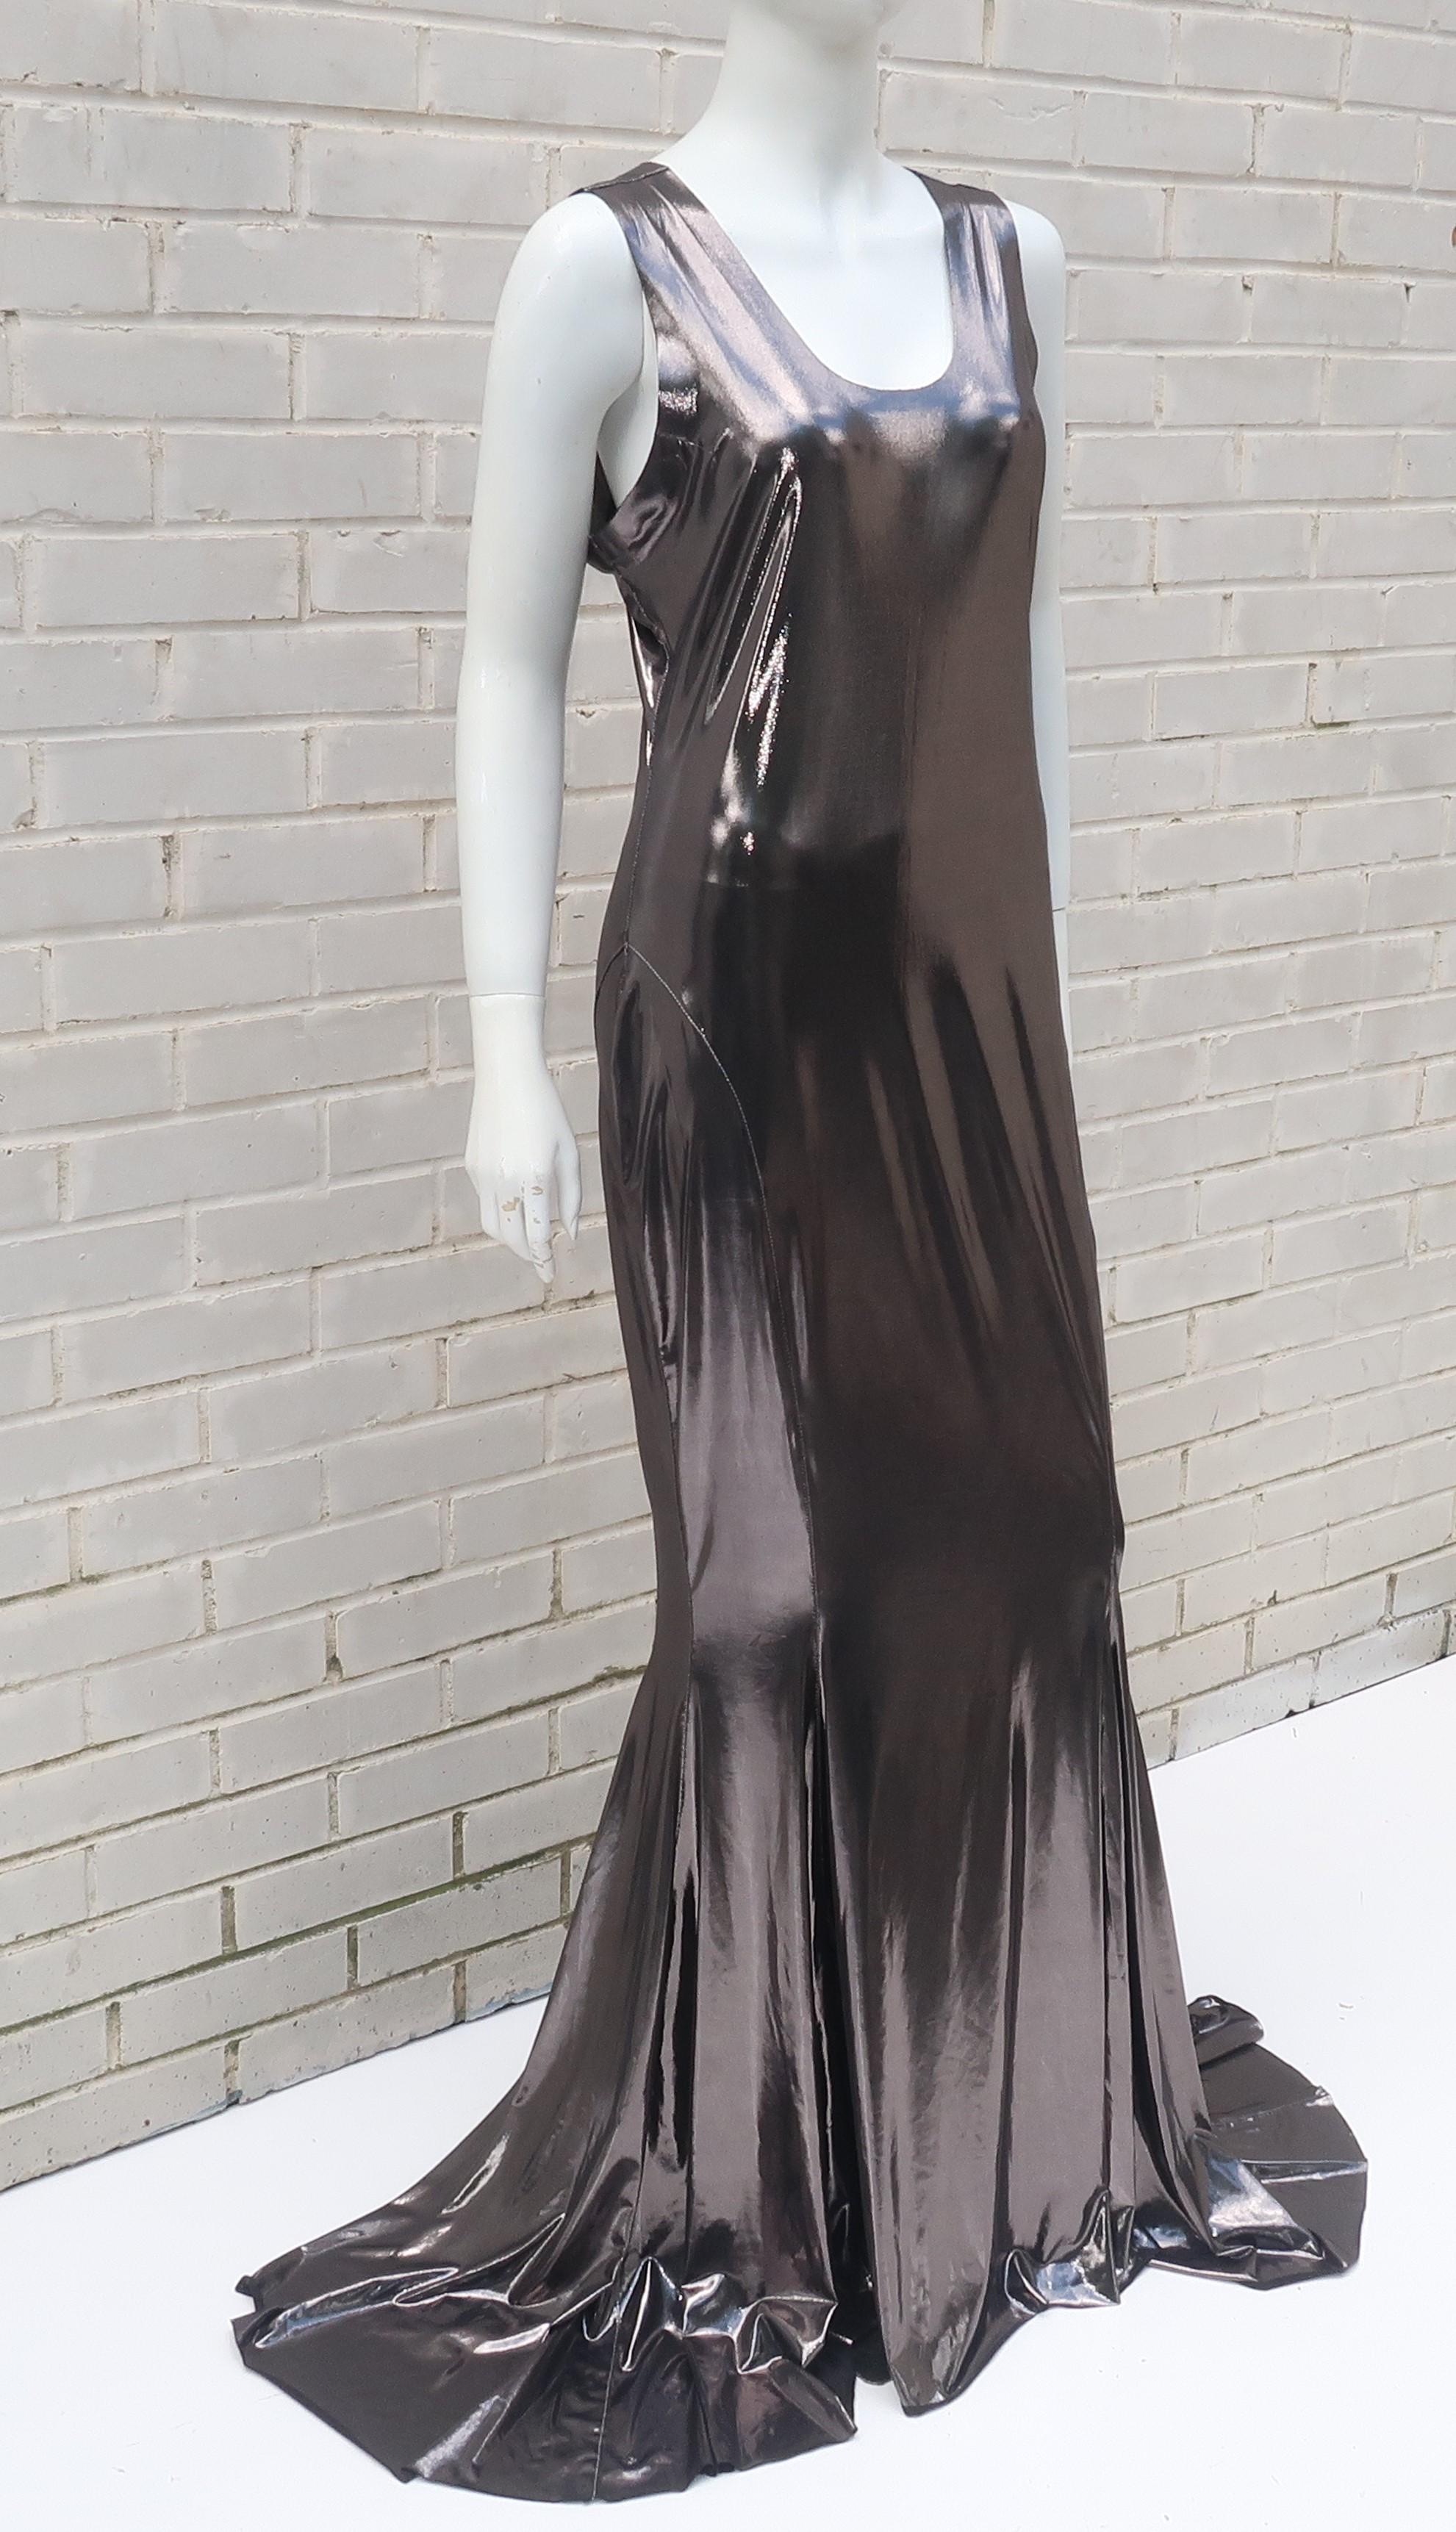 Black Norma Kamali Racer Fishtail Metallic Evening Gown Dress